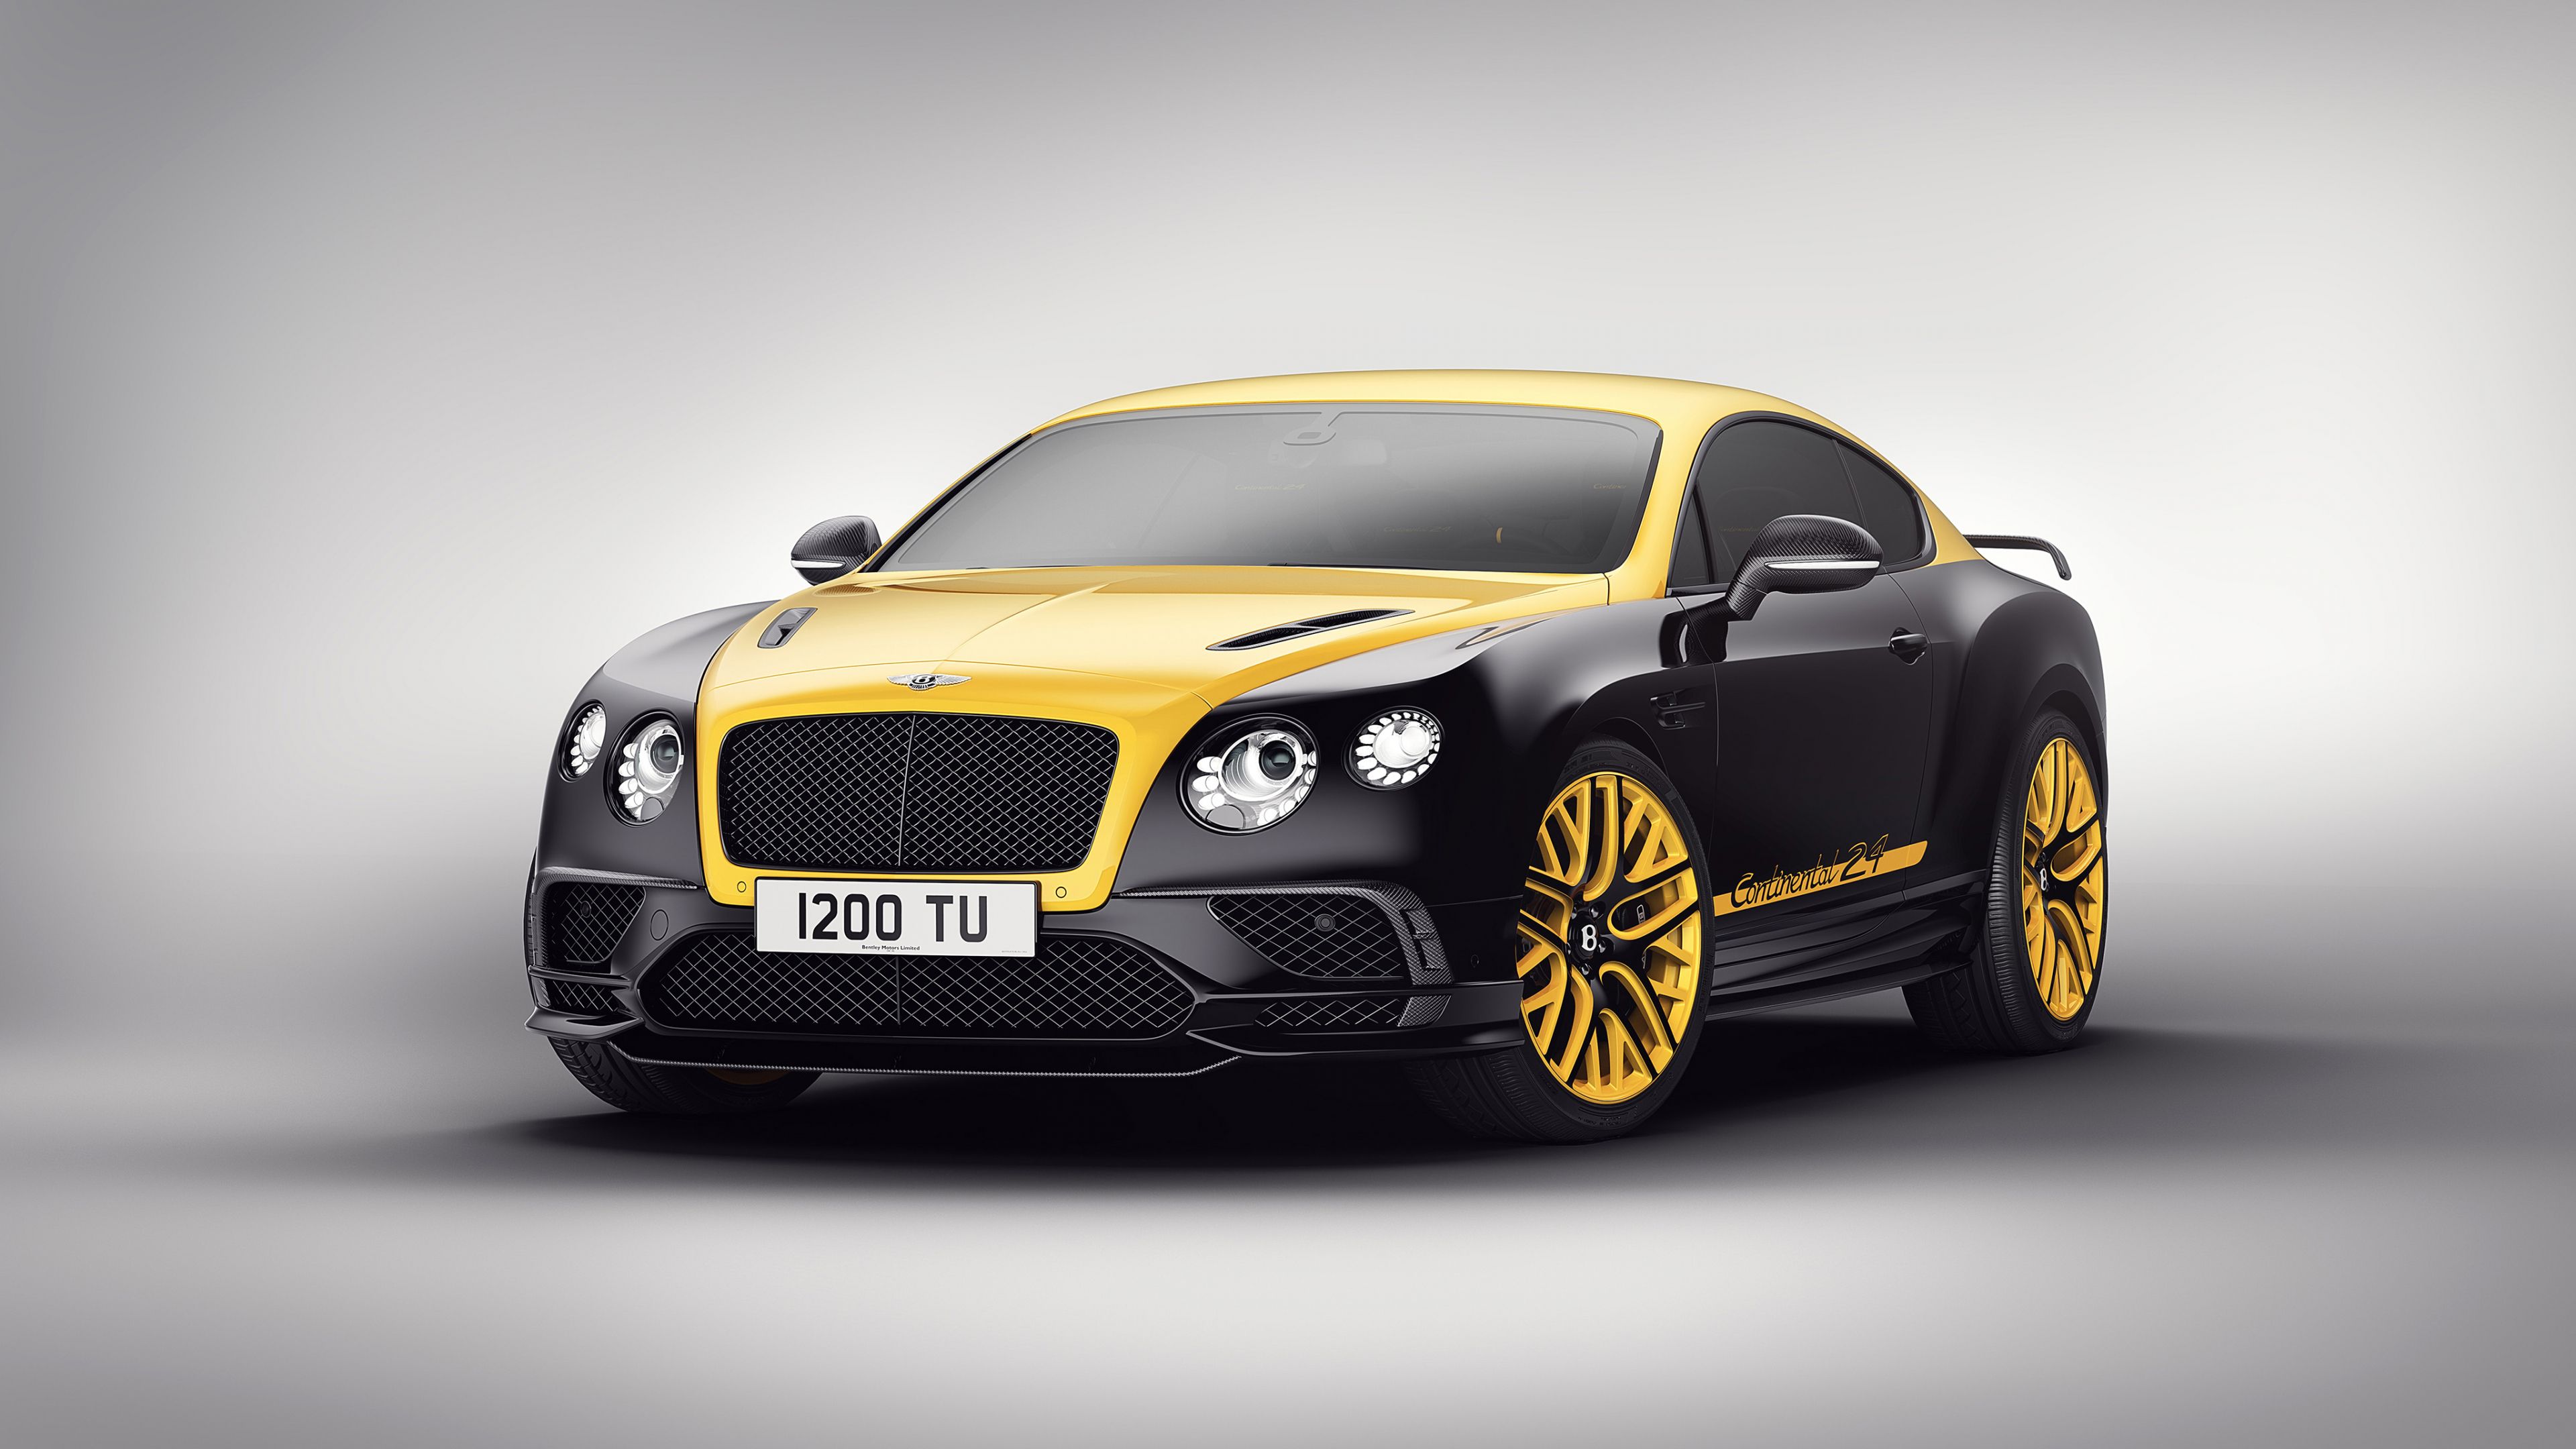 Desktop Wallpaper Yellow & Black Car, Bentley Continental Gt, HD Image, Picture, Background, 6ykuq4